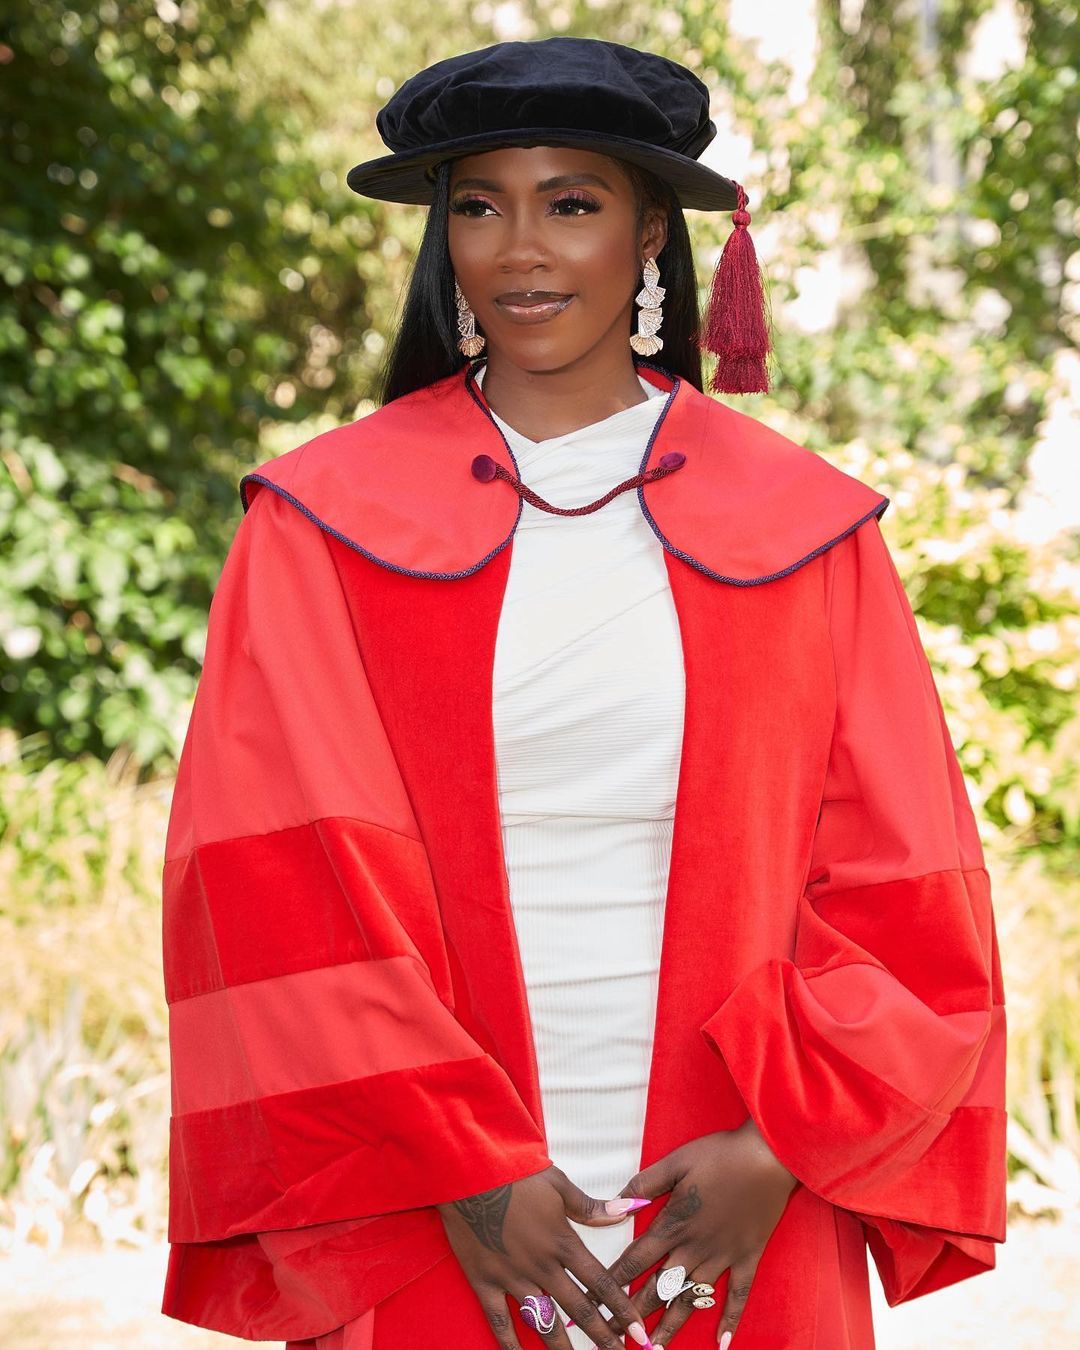 Tiwa - Tiwa Savage Bags Honorary Degree From The University Of Kent, UK (photos) 15762160_tiwasavagepost202207151821_jpegafff1588f571dd5097cbc87e638c2007